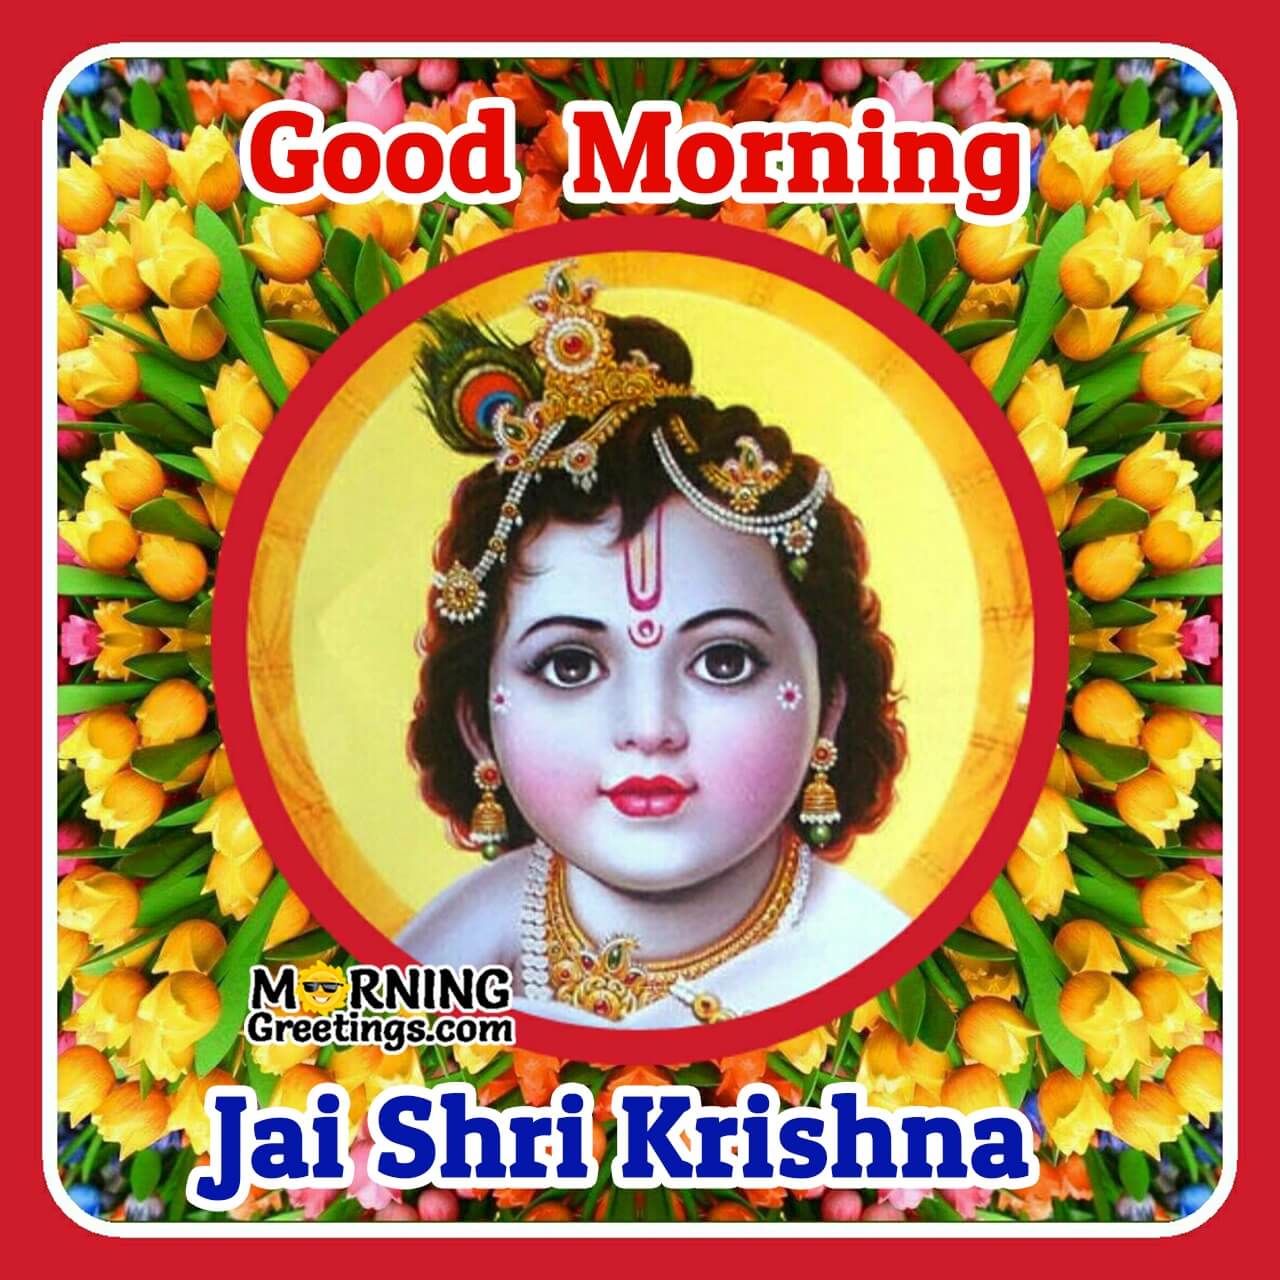 12 Wonderful Morning Picture Of Shri Bal Krishna - Morning ...